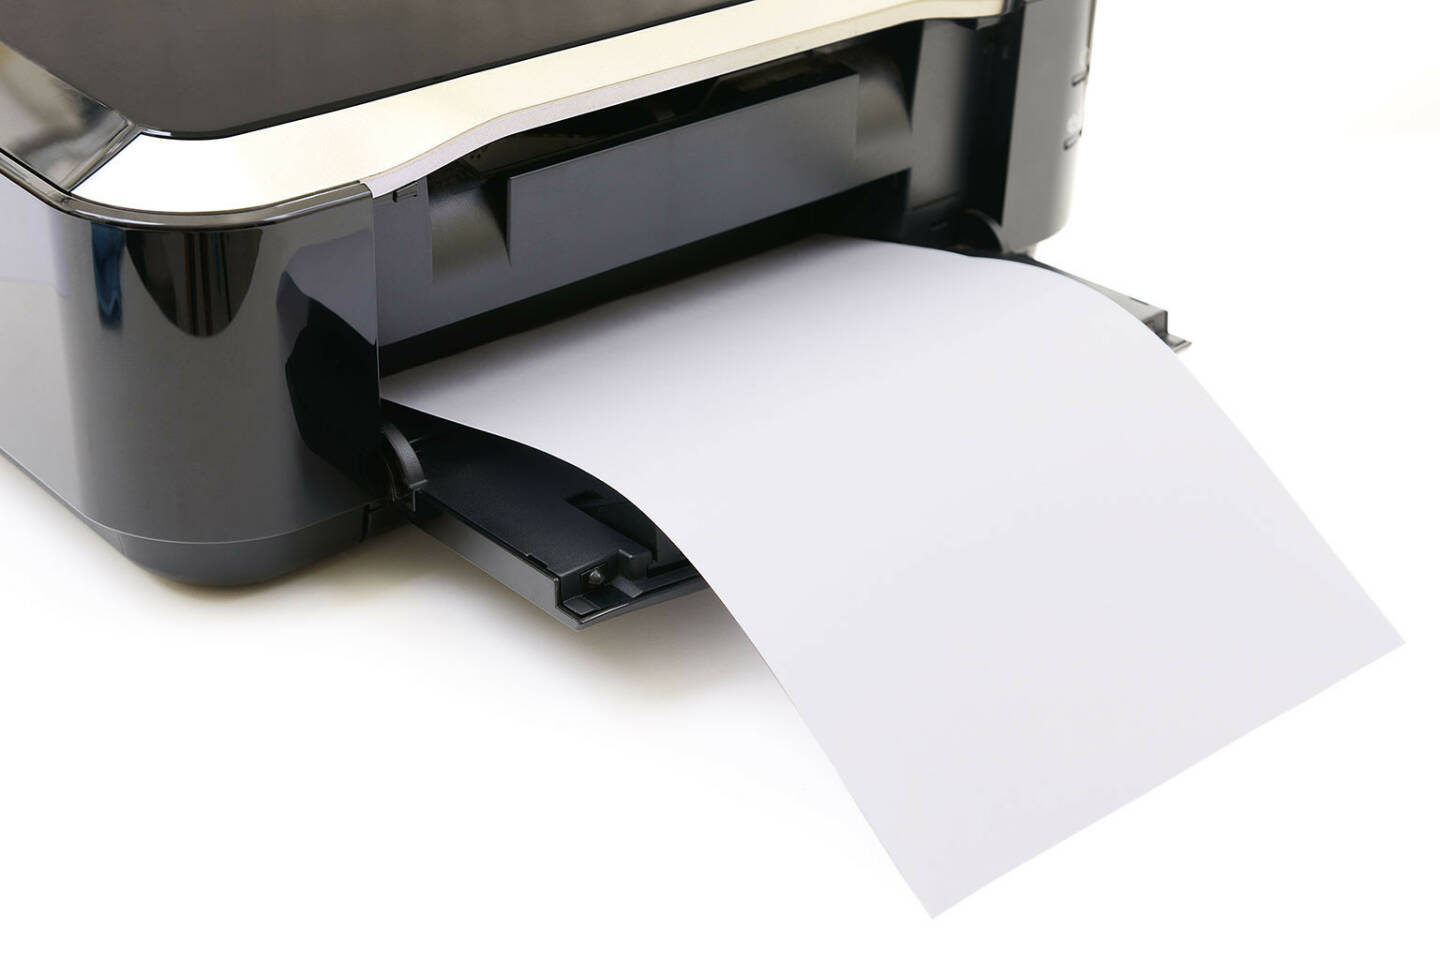 Drucker, Papier, Ausdruck, Dokument http://www.shutterstock.com/de/pic-159902264/stock-photo-printer-and-paper-isolated-on-white-background.html